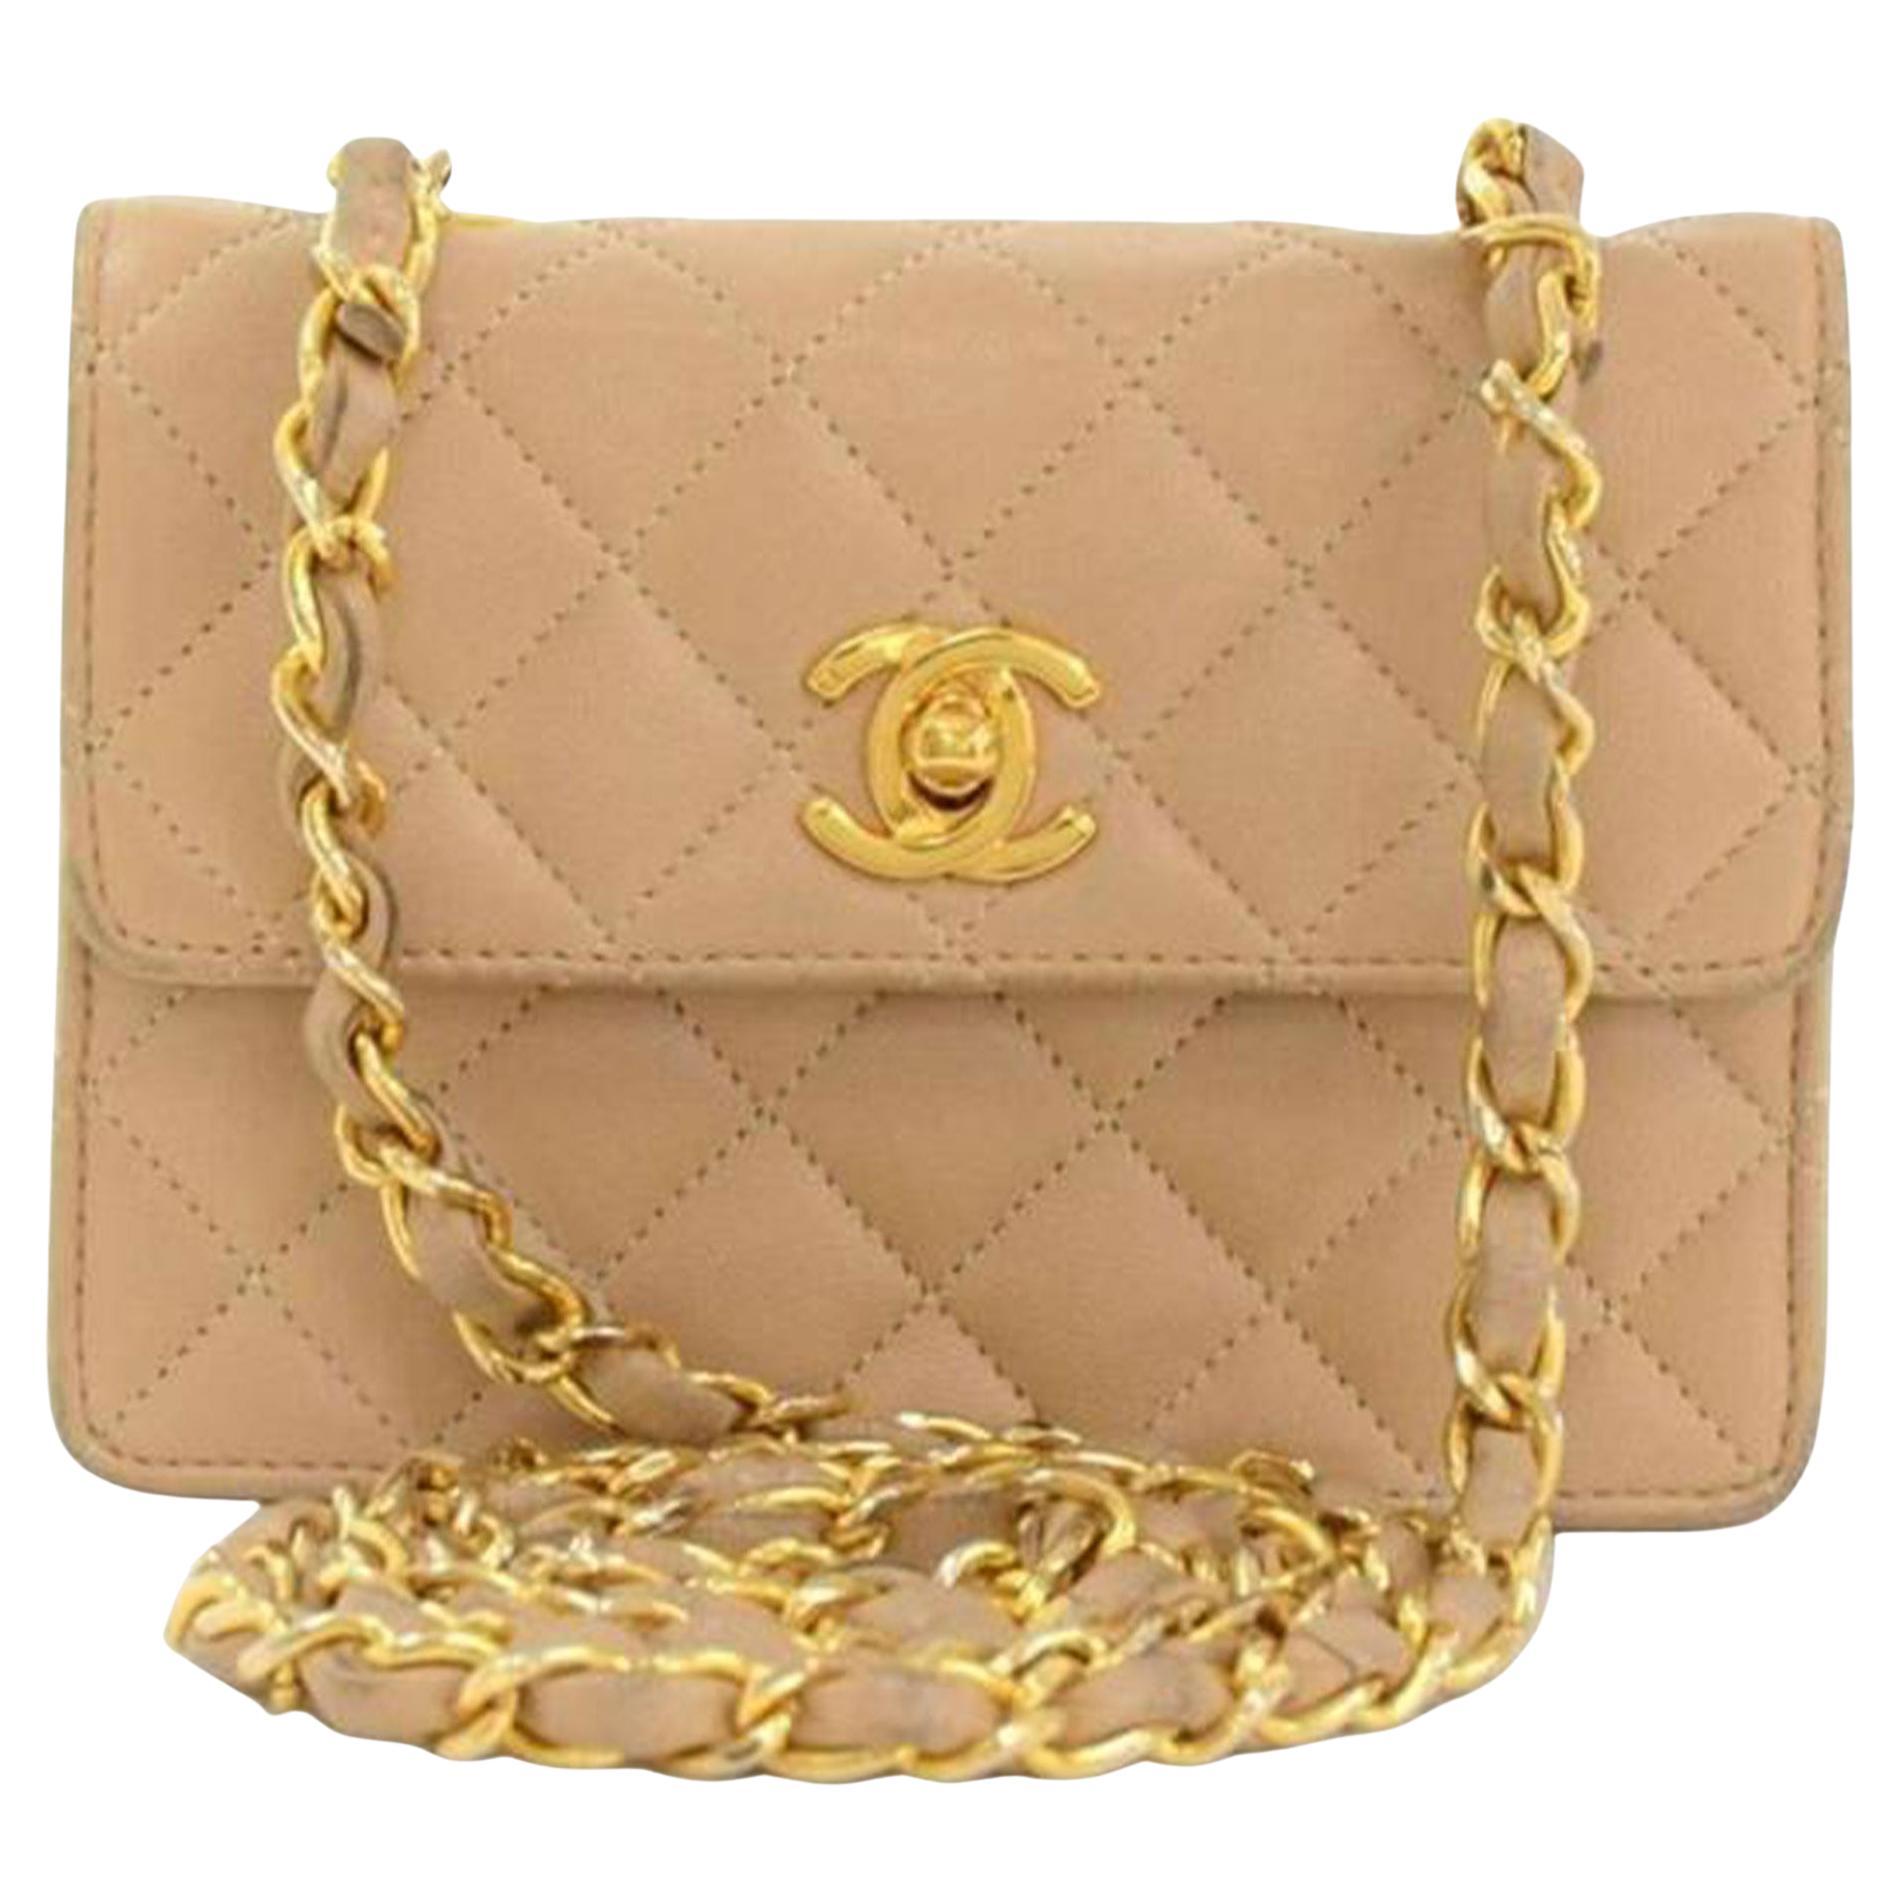 Chanel Mini Classic Flap Micro  Beige Lammfell Leder Cross Body Bag